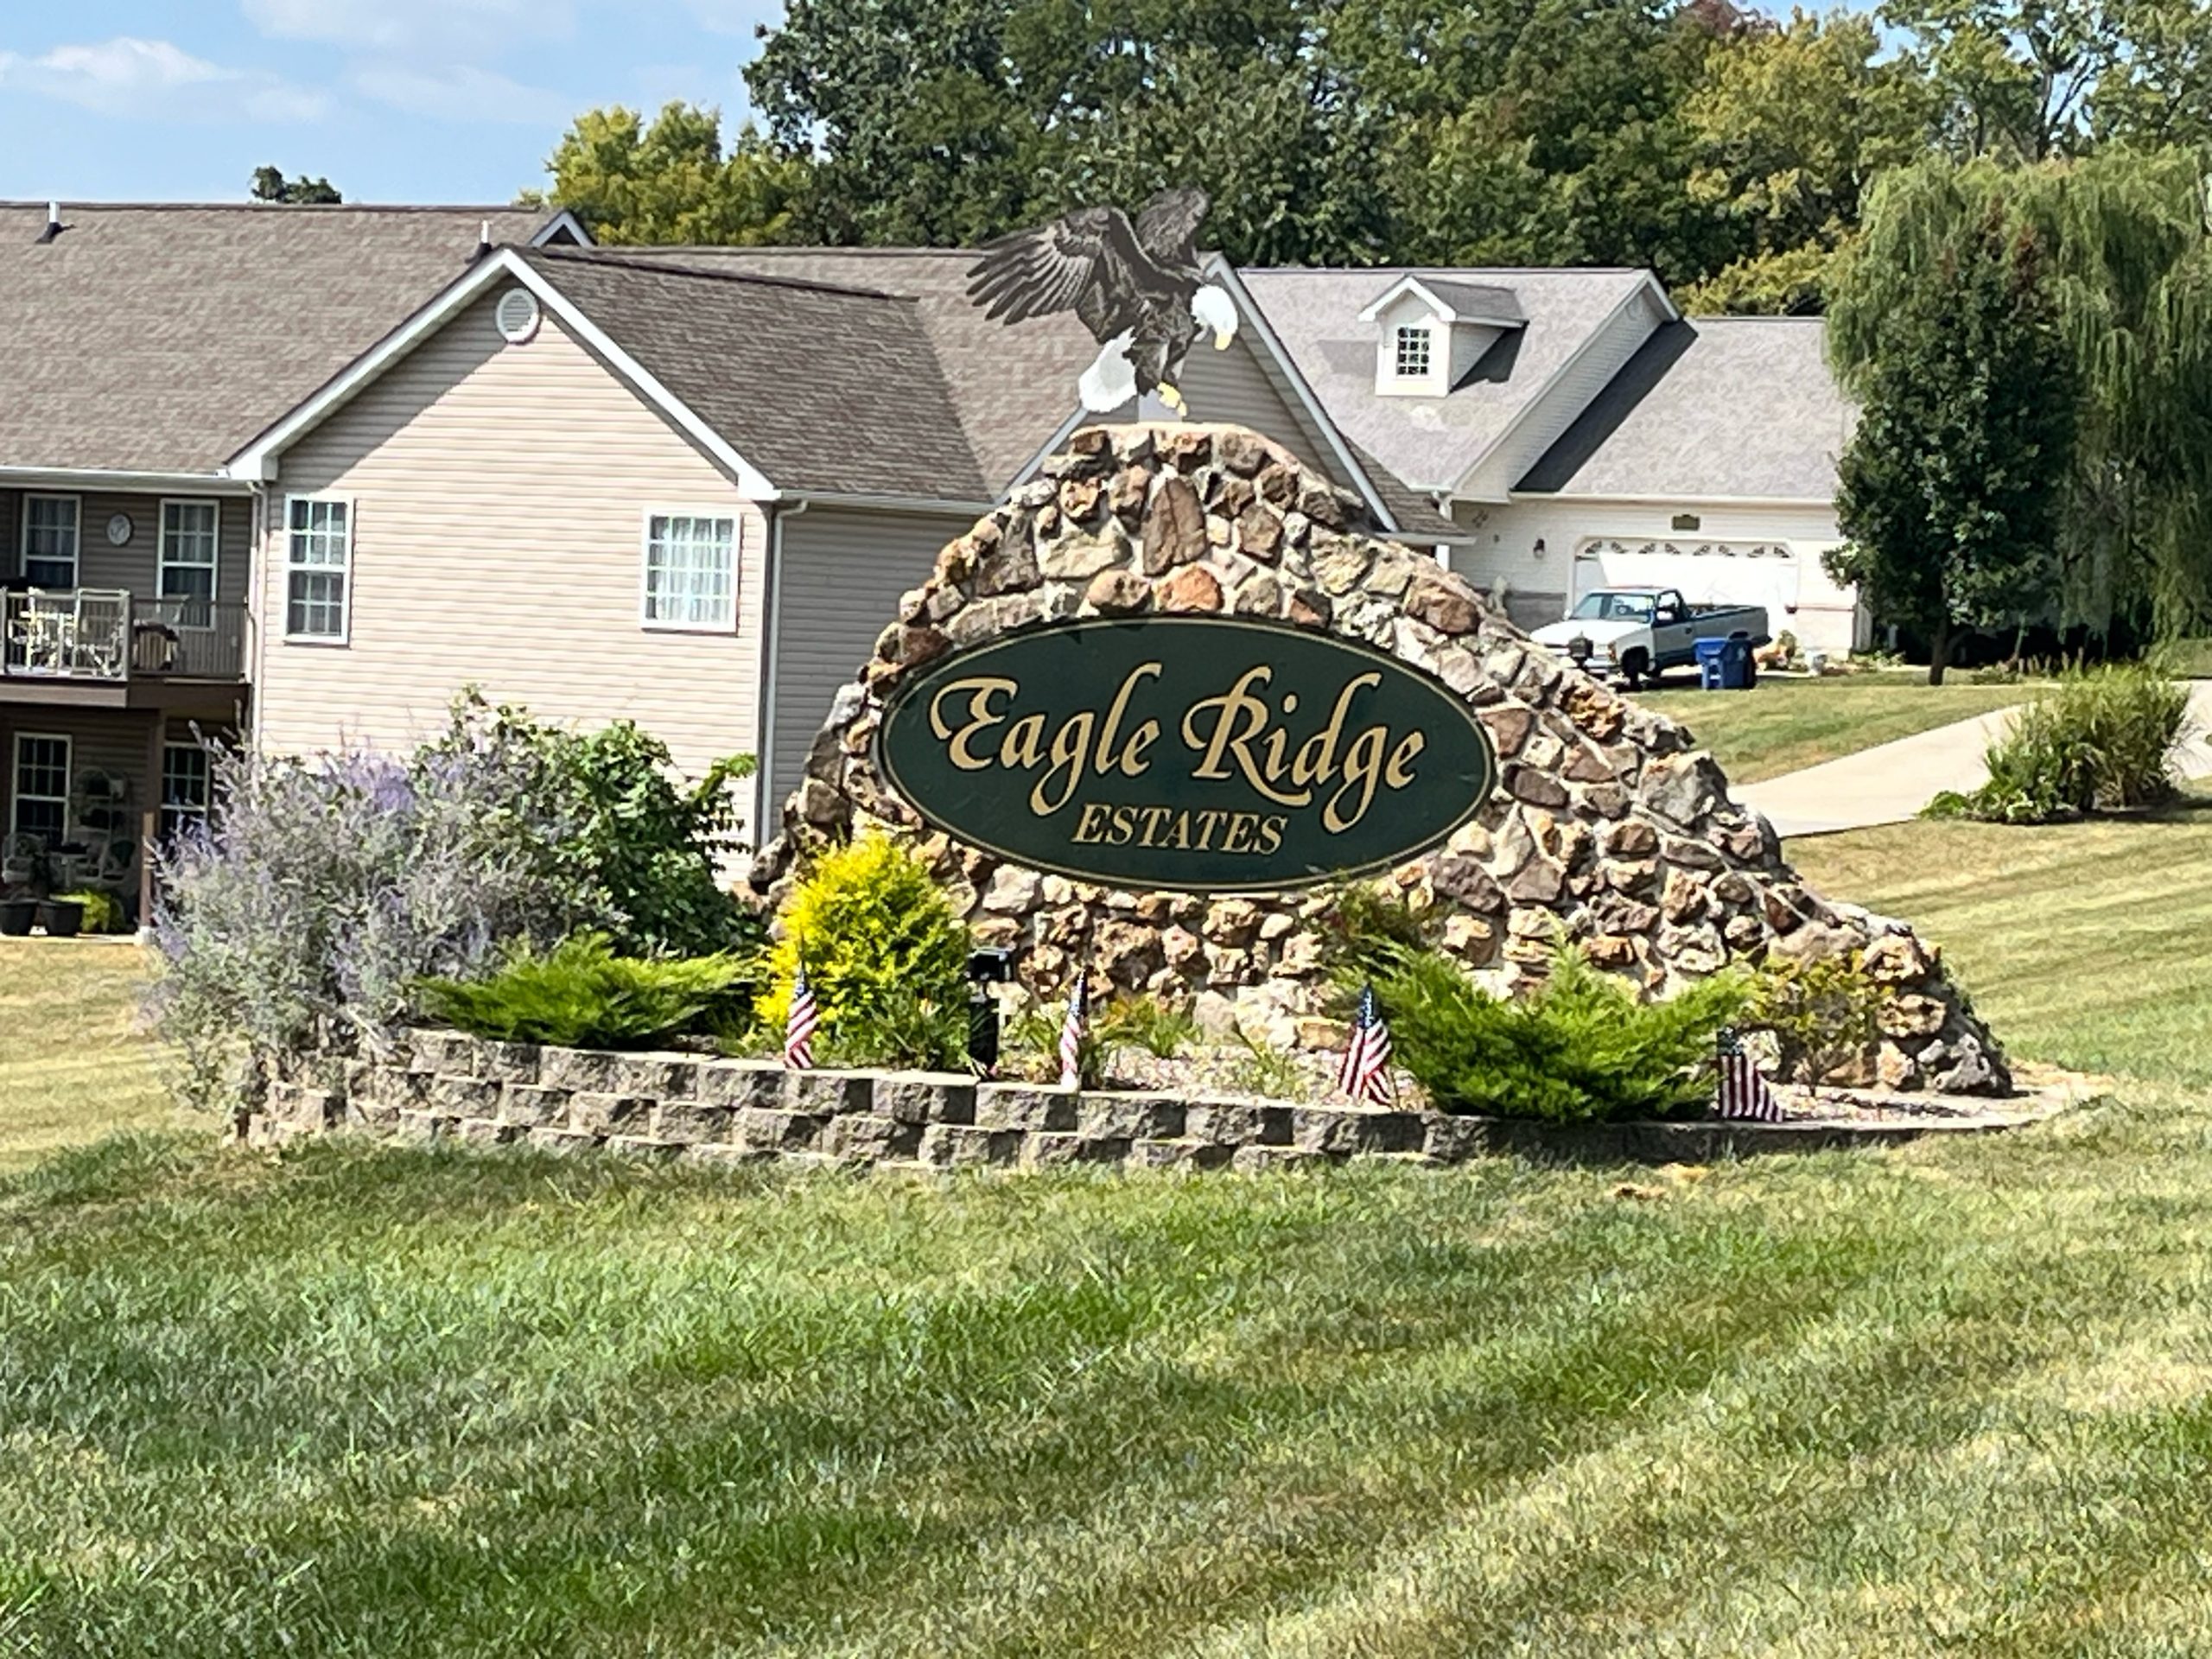 Eagle Ridge Estates